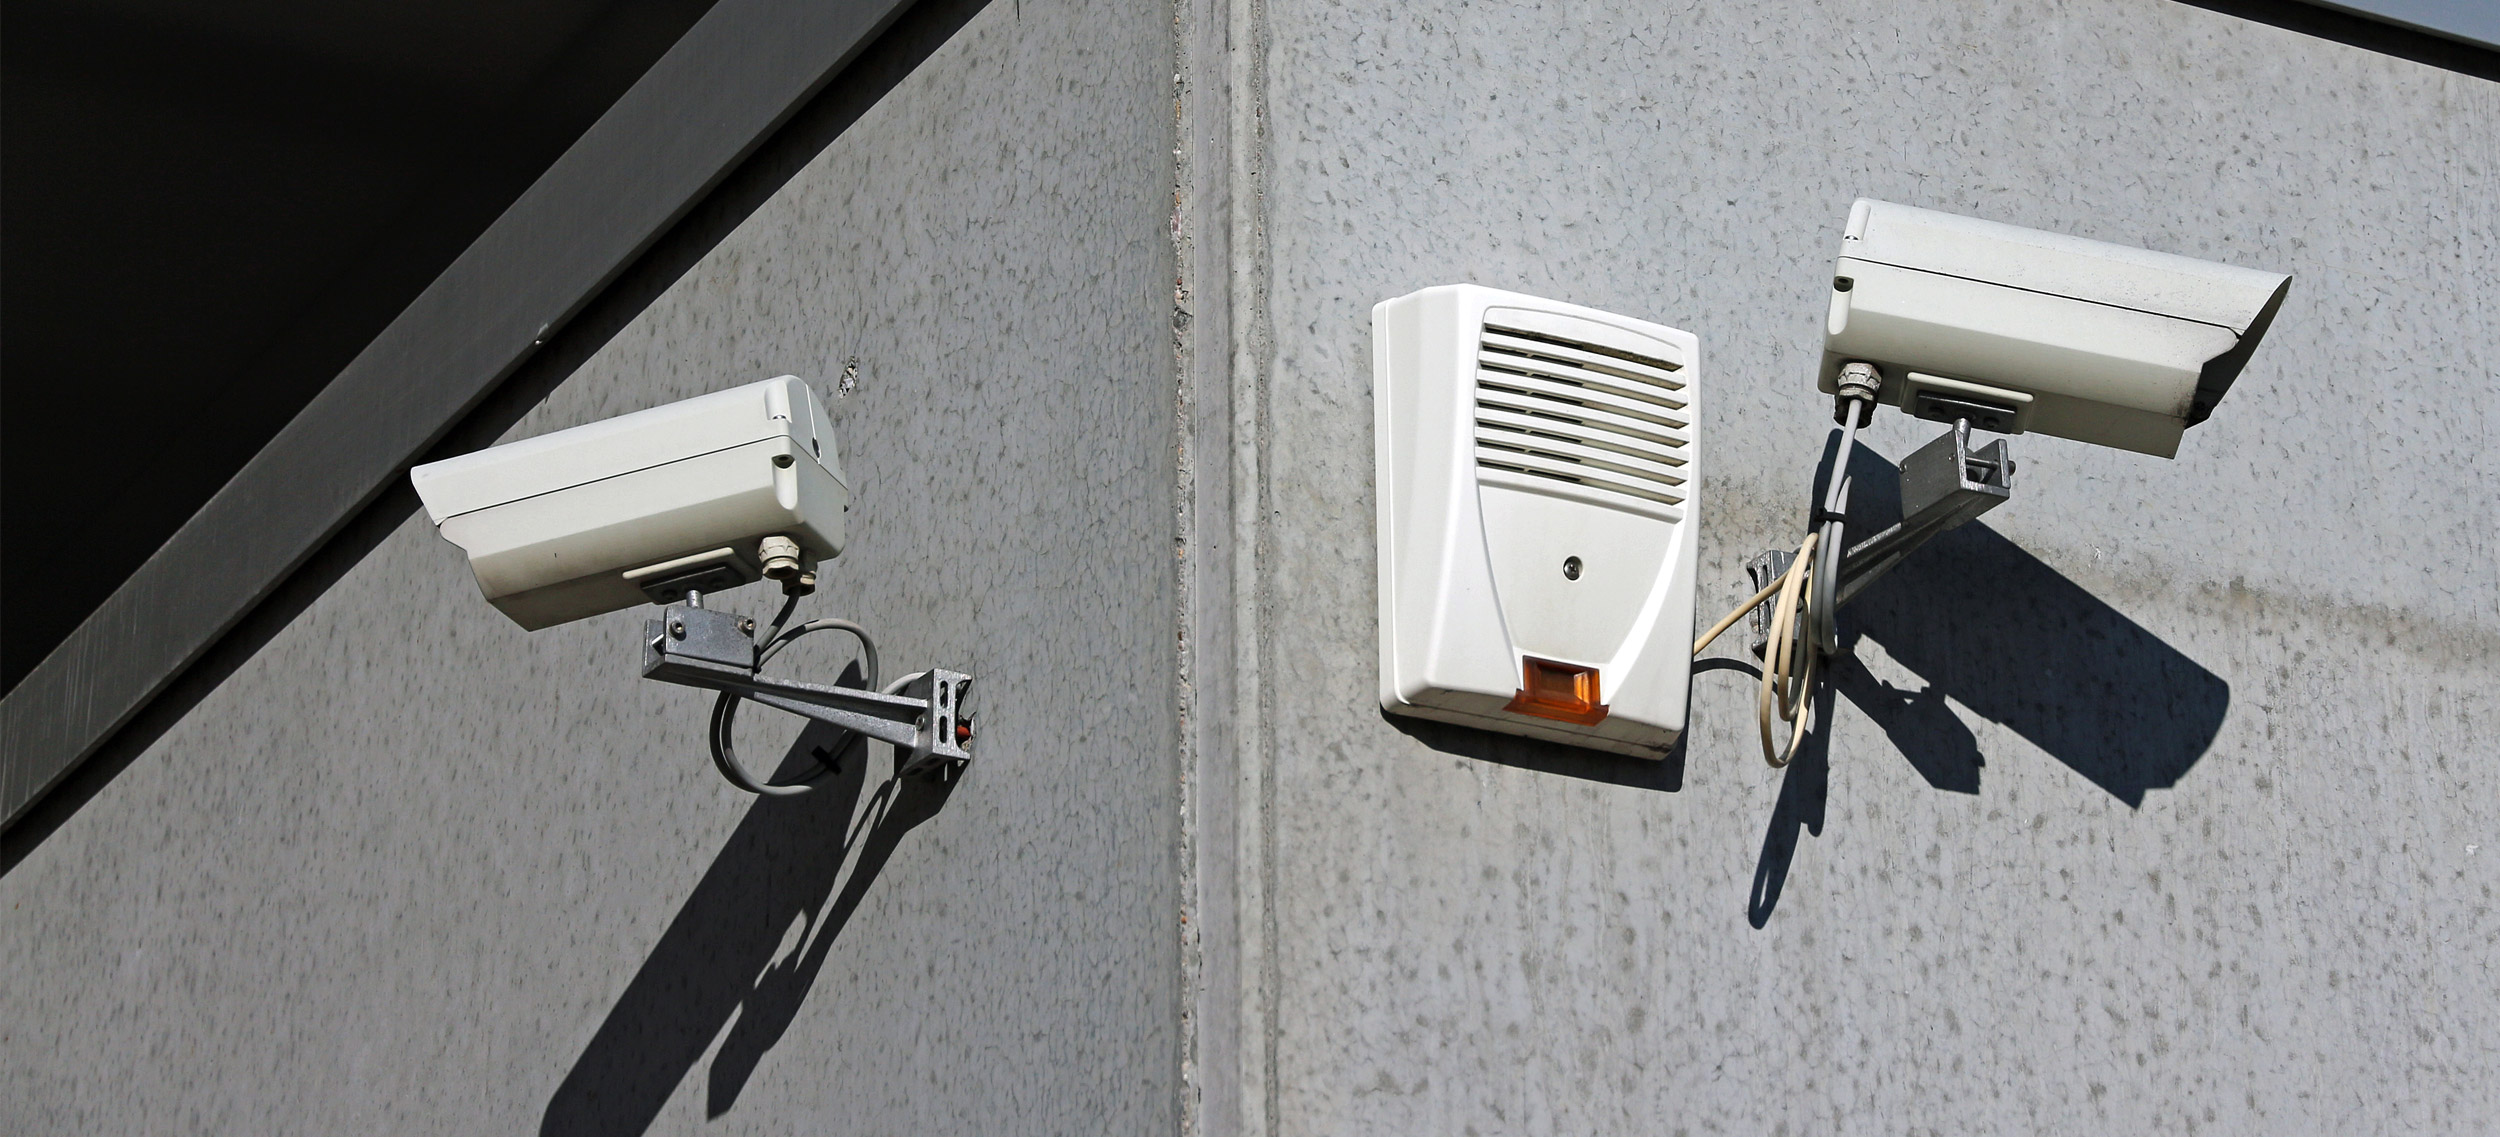 SAP installation de camera de surveillance